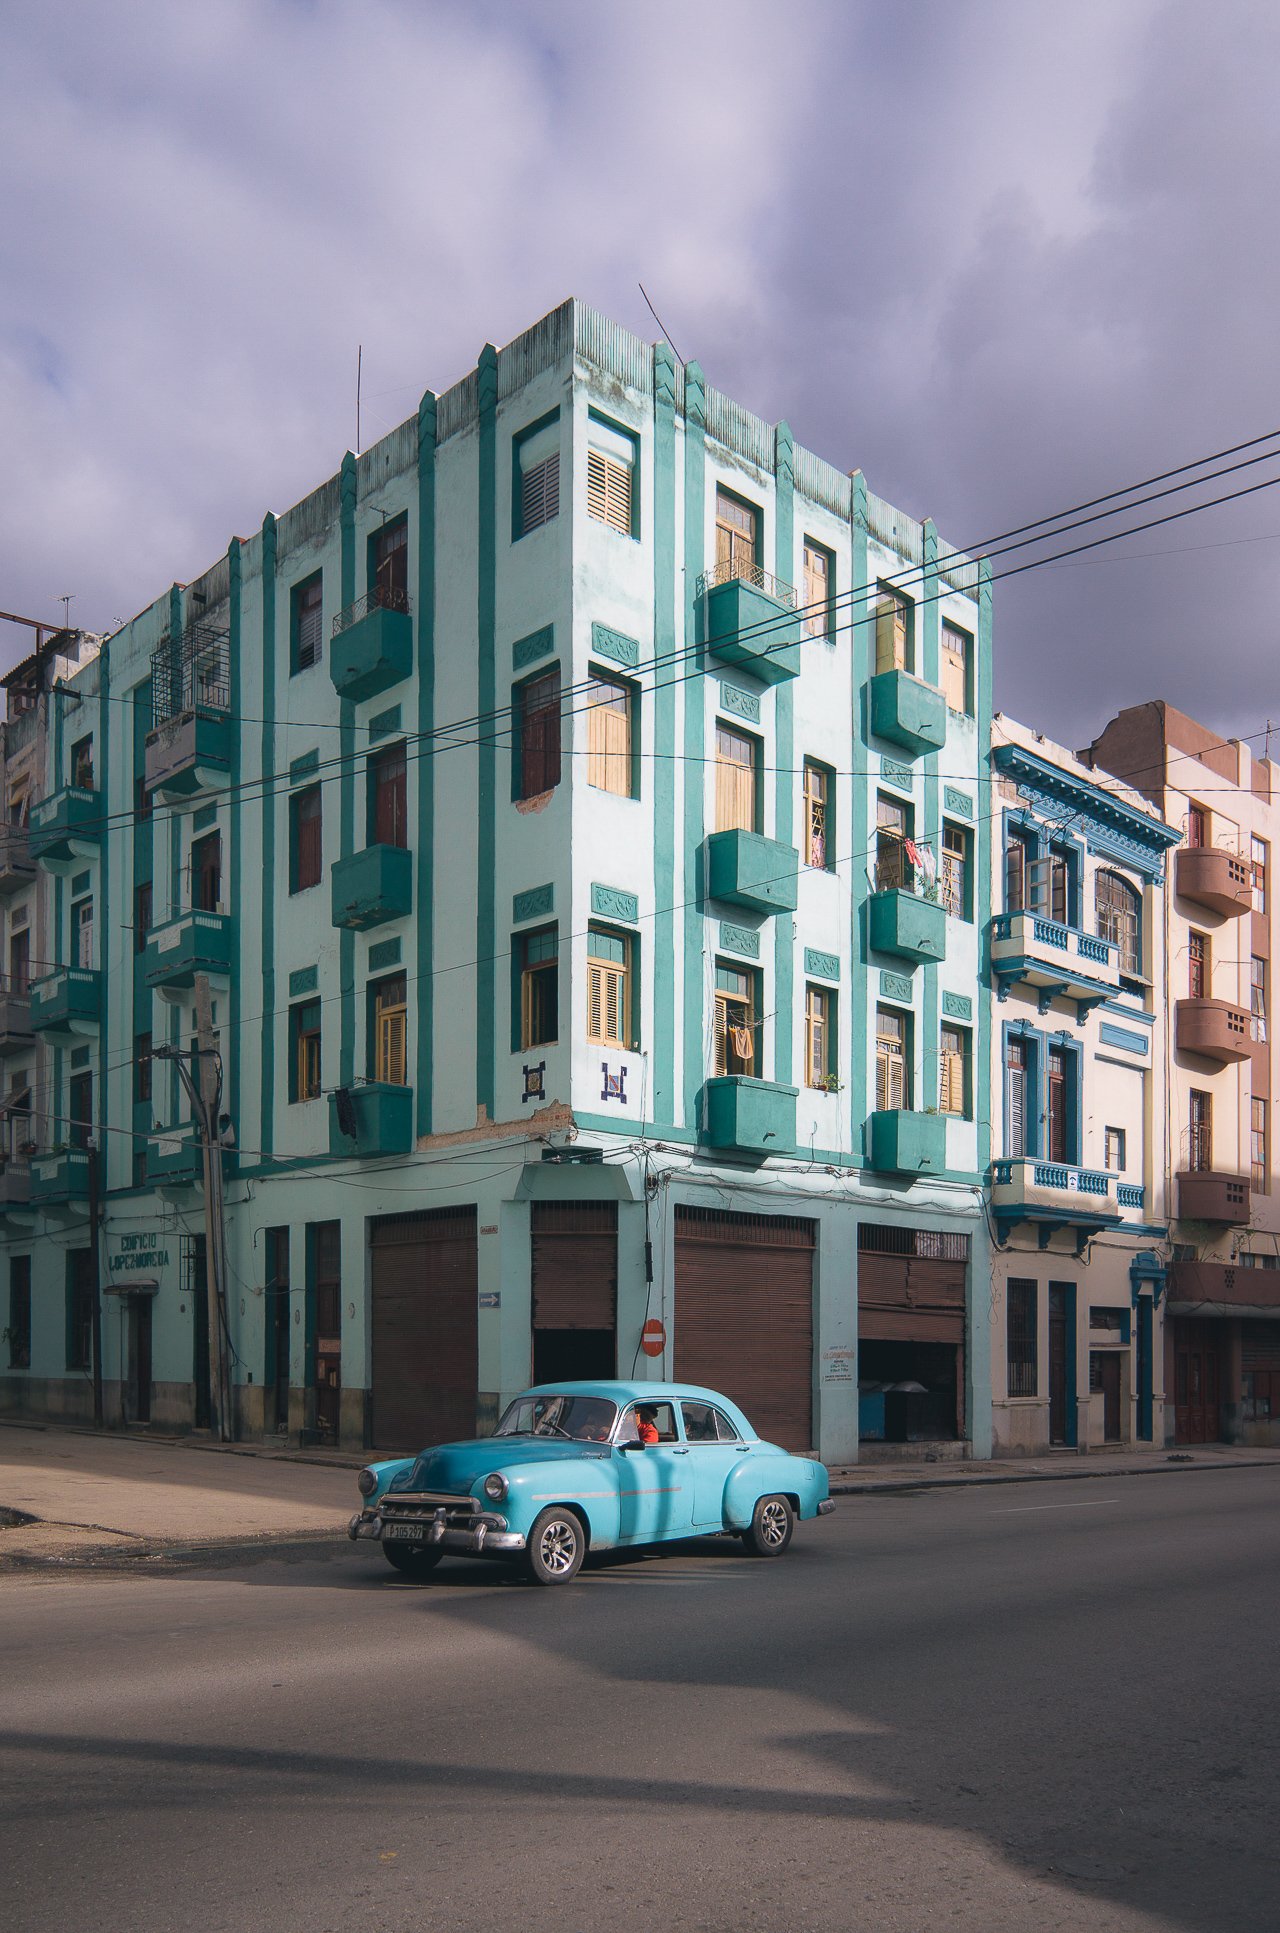 Leica Camera x Cuba